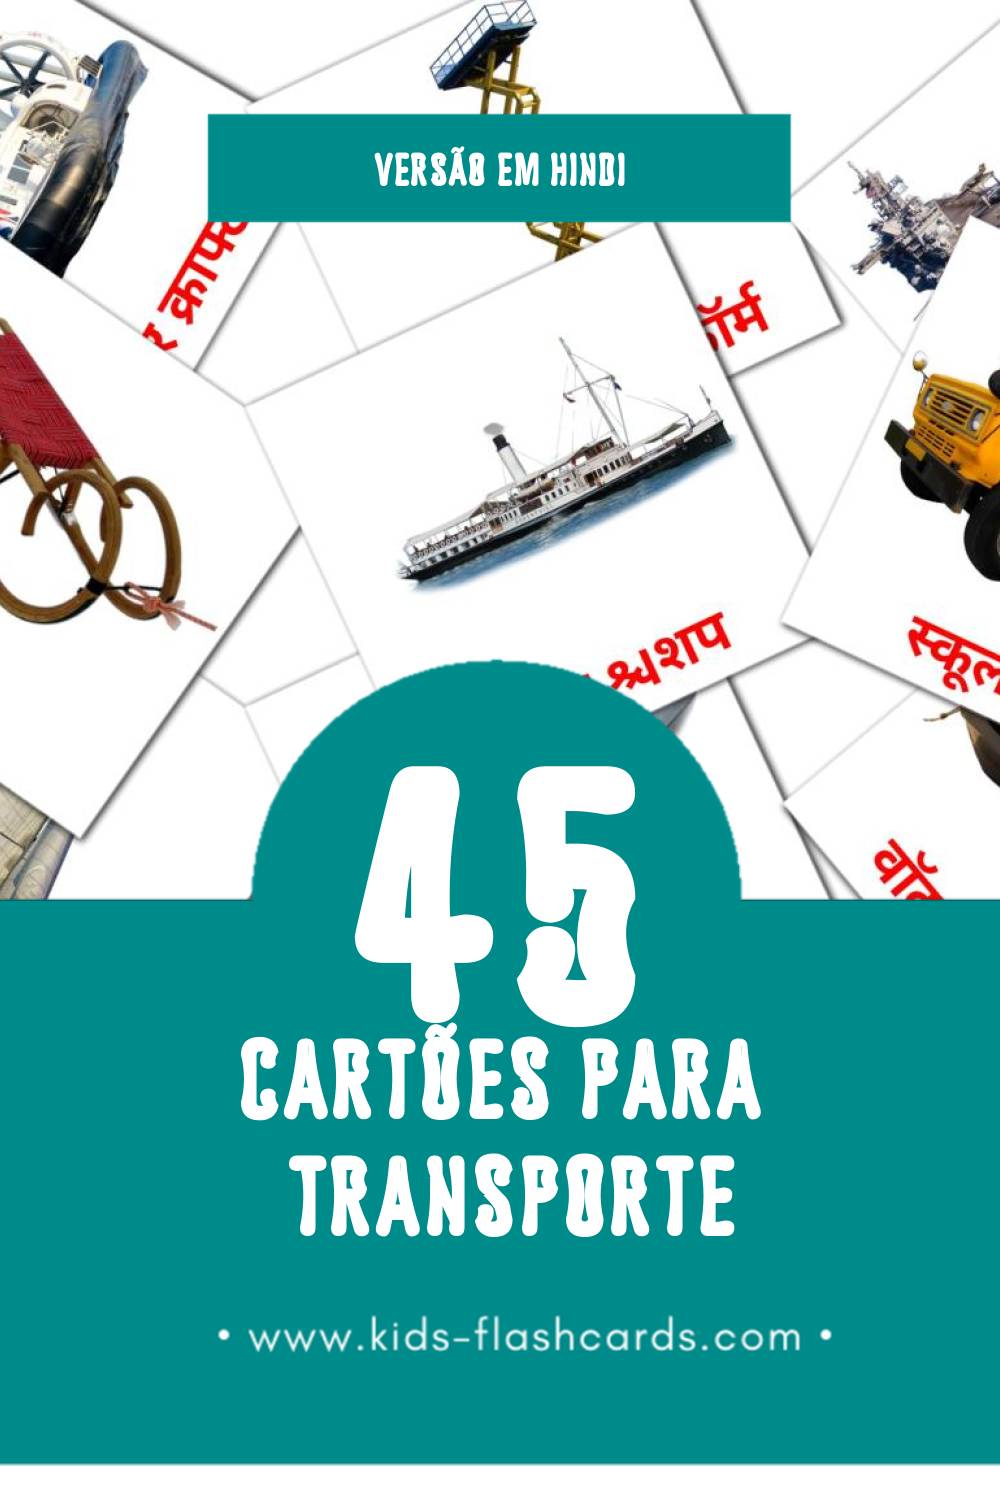 Flashcards de परिवहन  Visuais para Toddlers (45 cartões em Hindi)